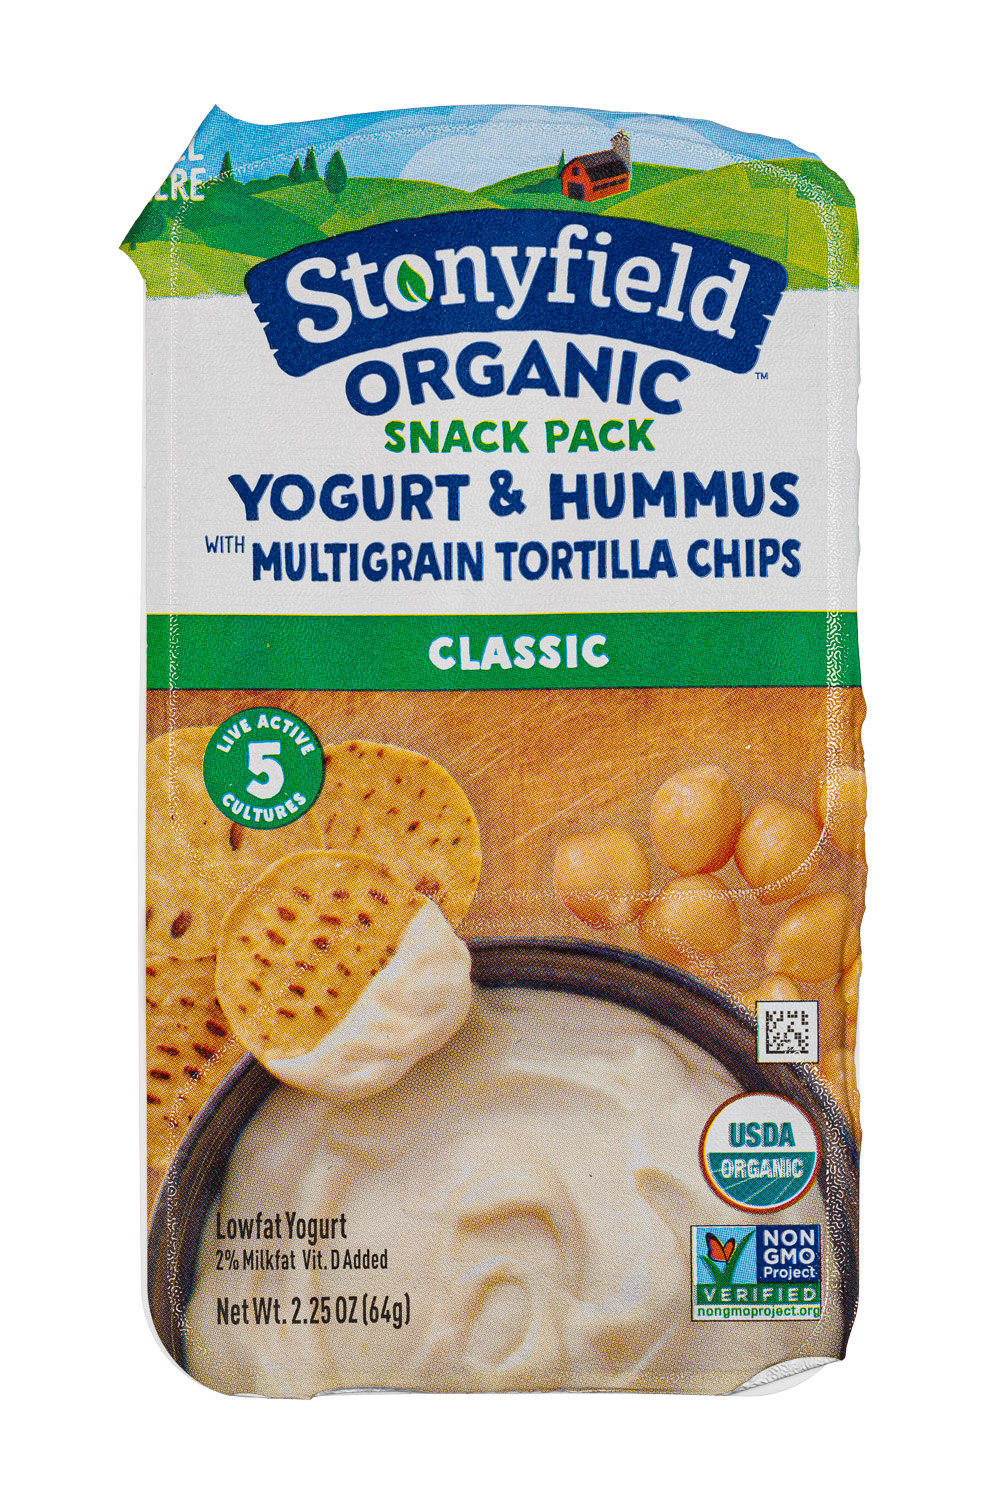 Classic - Yogurt & Hummus with Multigrain Tortilla Chips